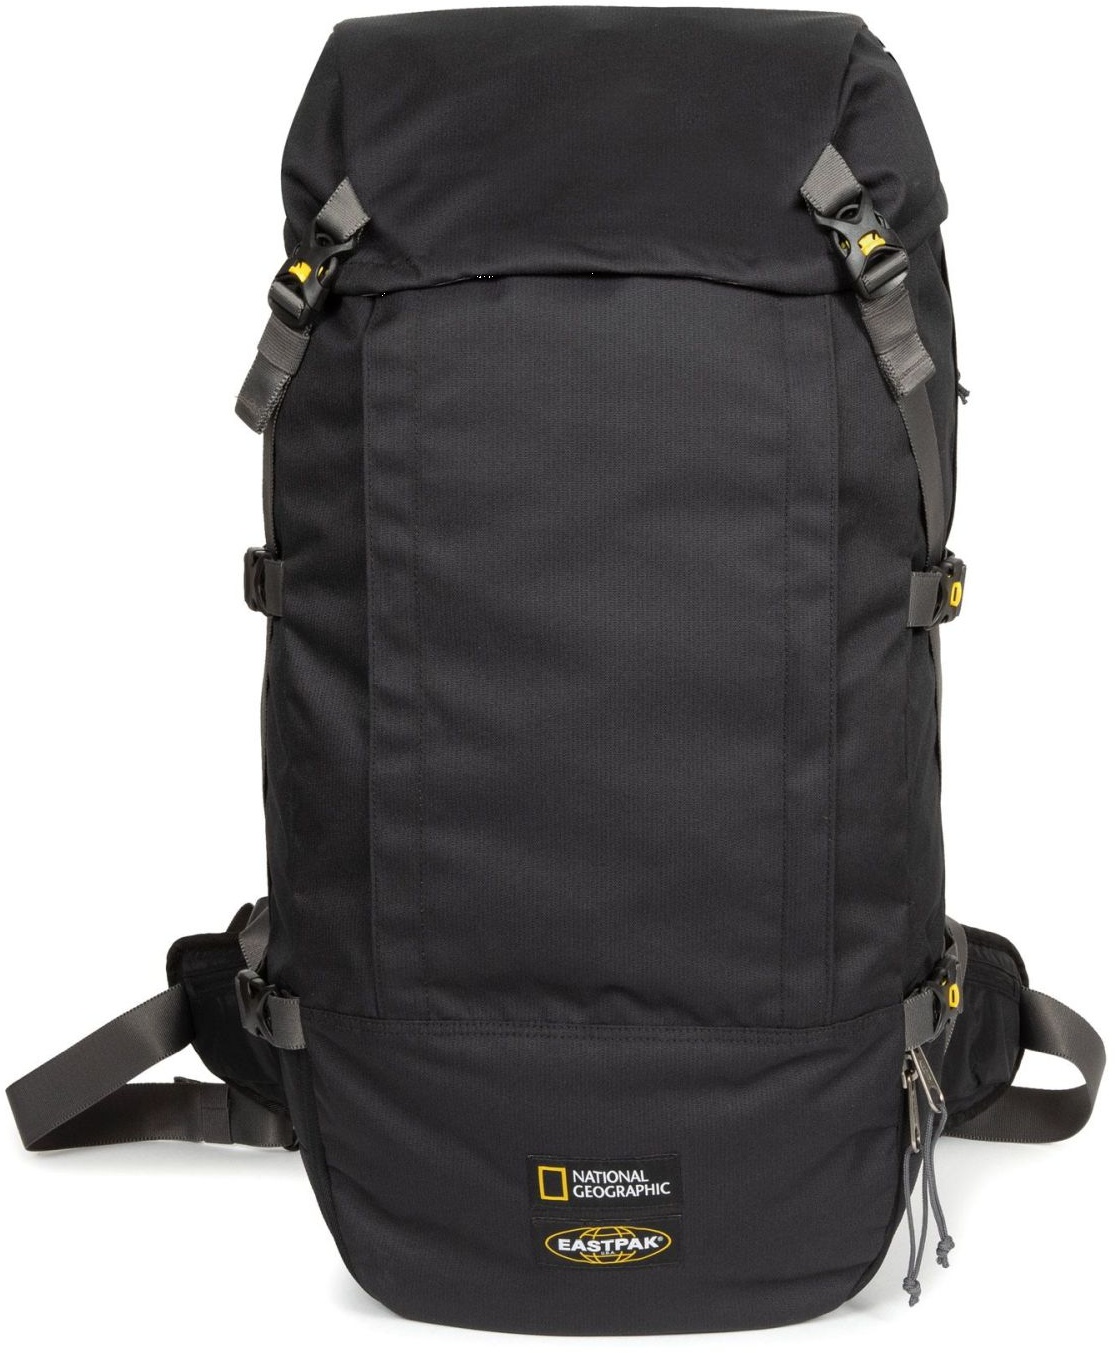 Eastpak National Geographic Hiking Pack Black